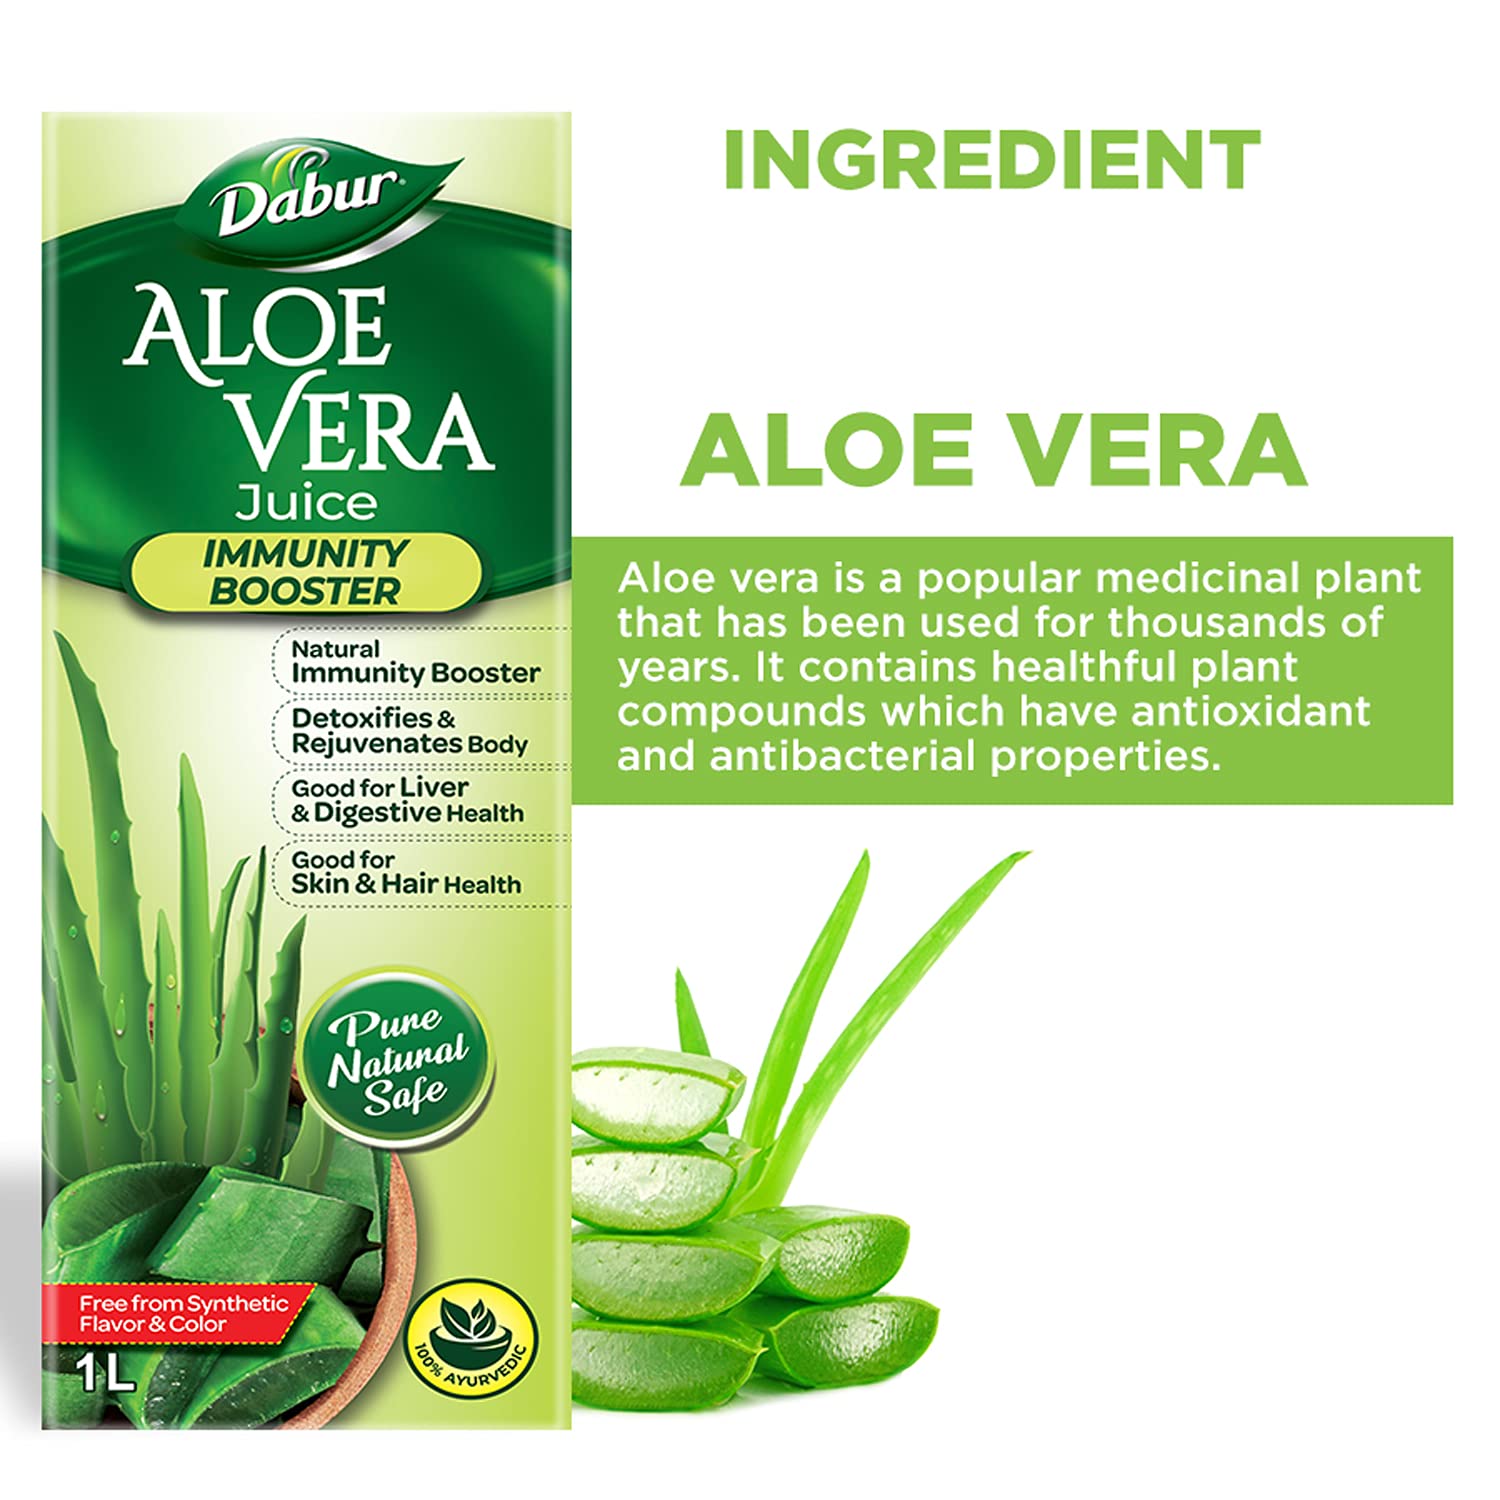 Does aloe vera juice make your dick bigger